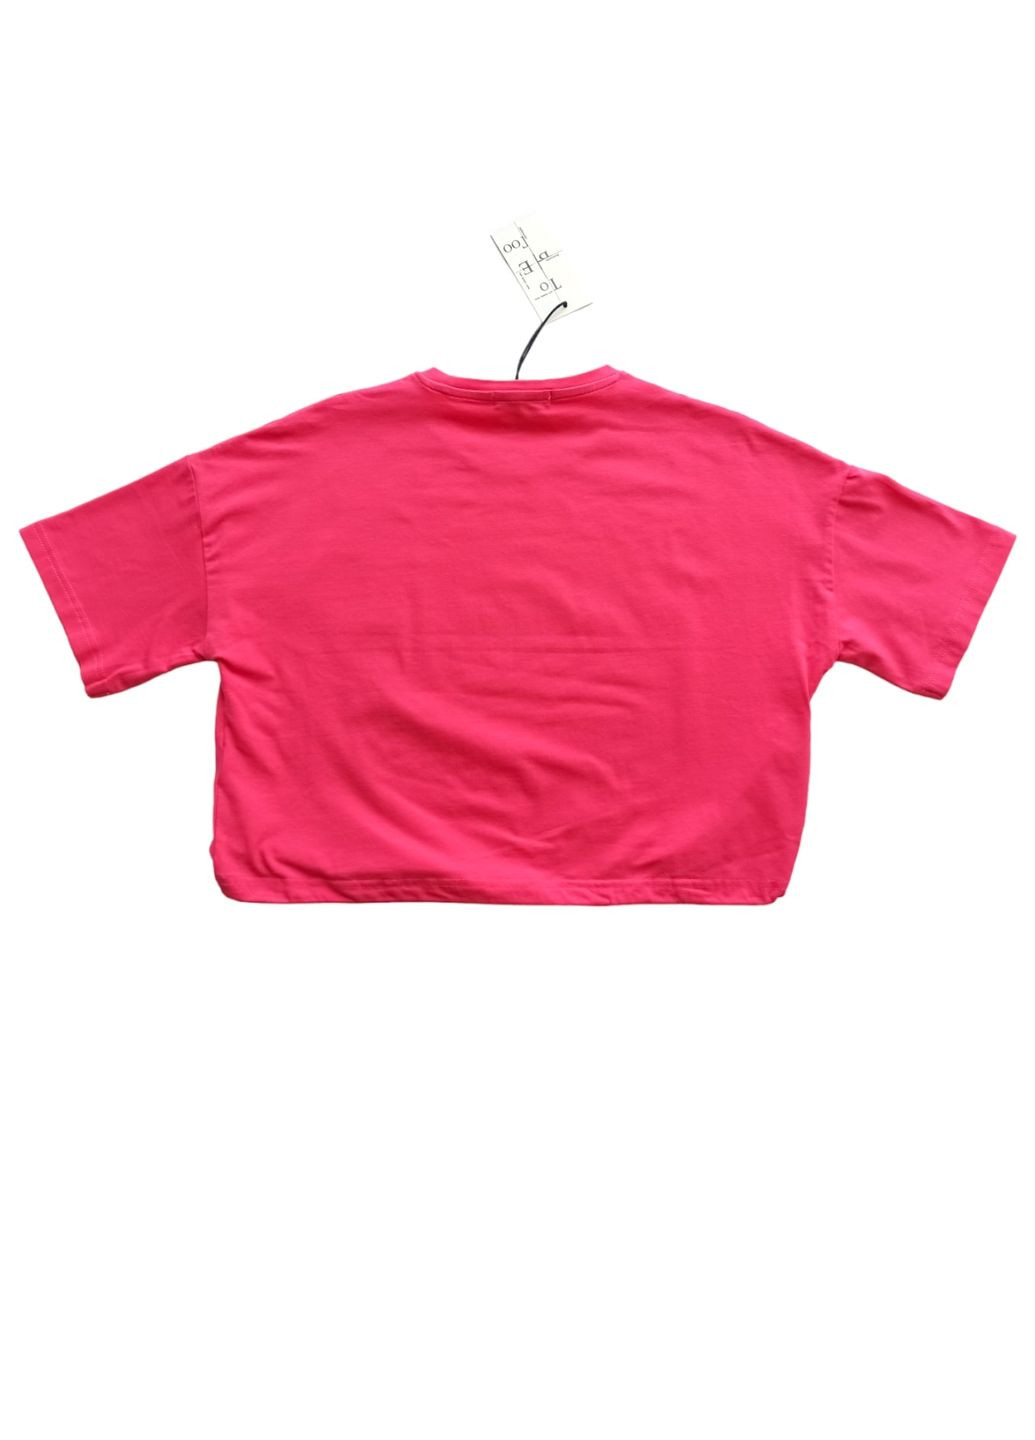 Фуксиновая летняя футболка для девушки tbt834 фуксия To Be Too